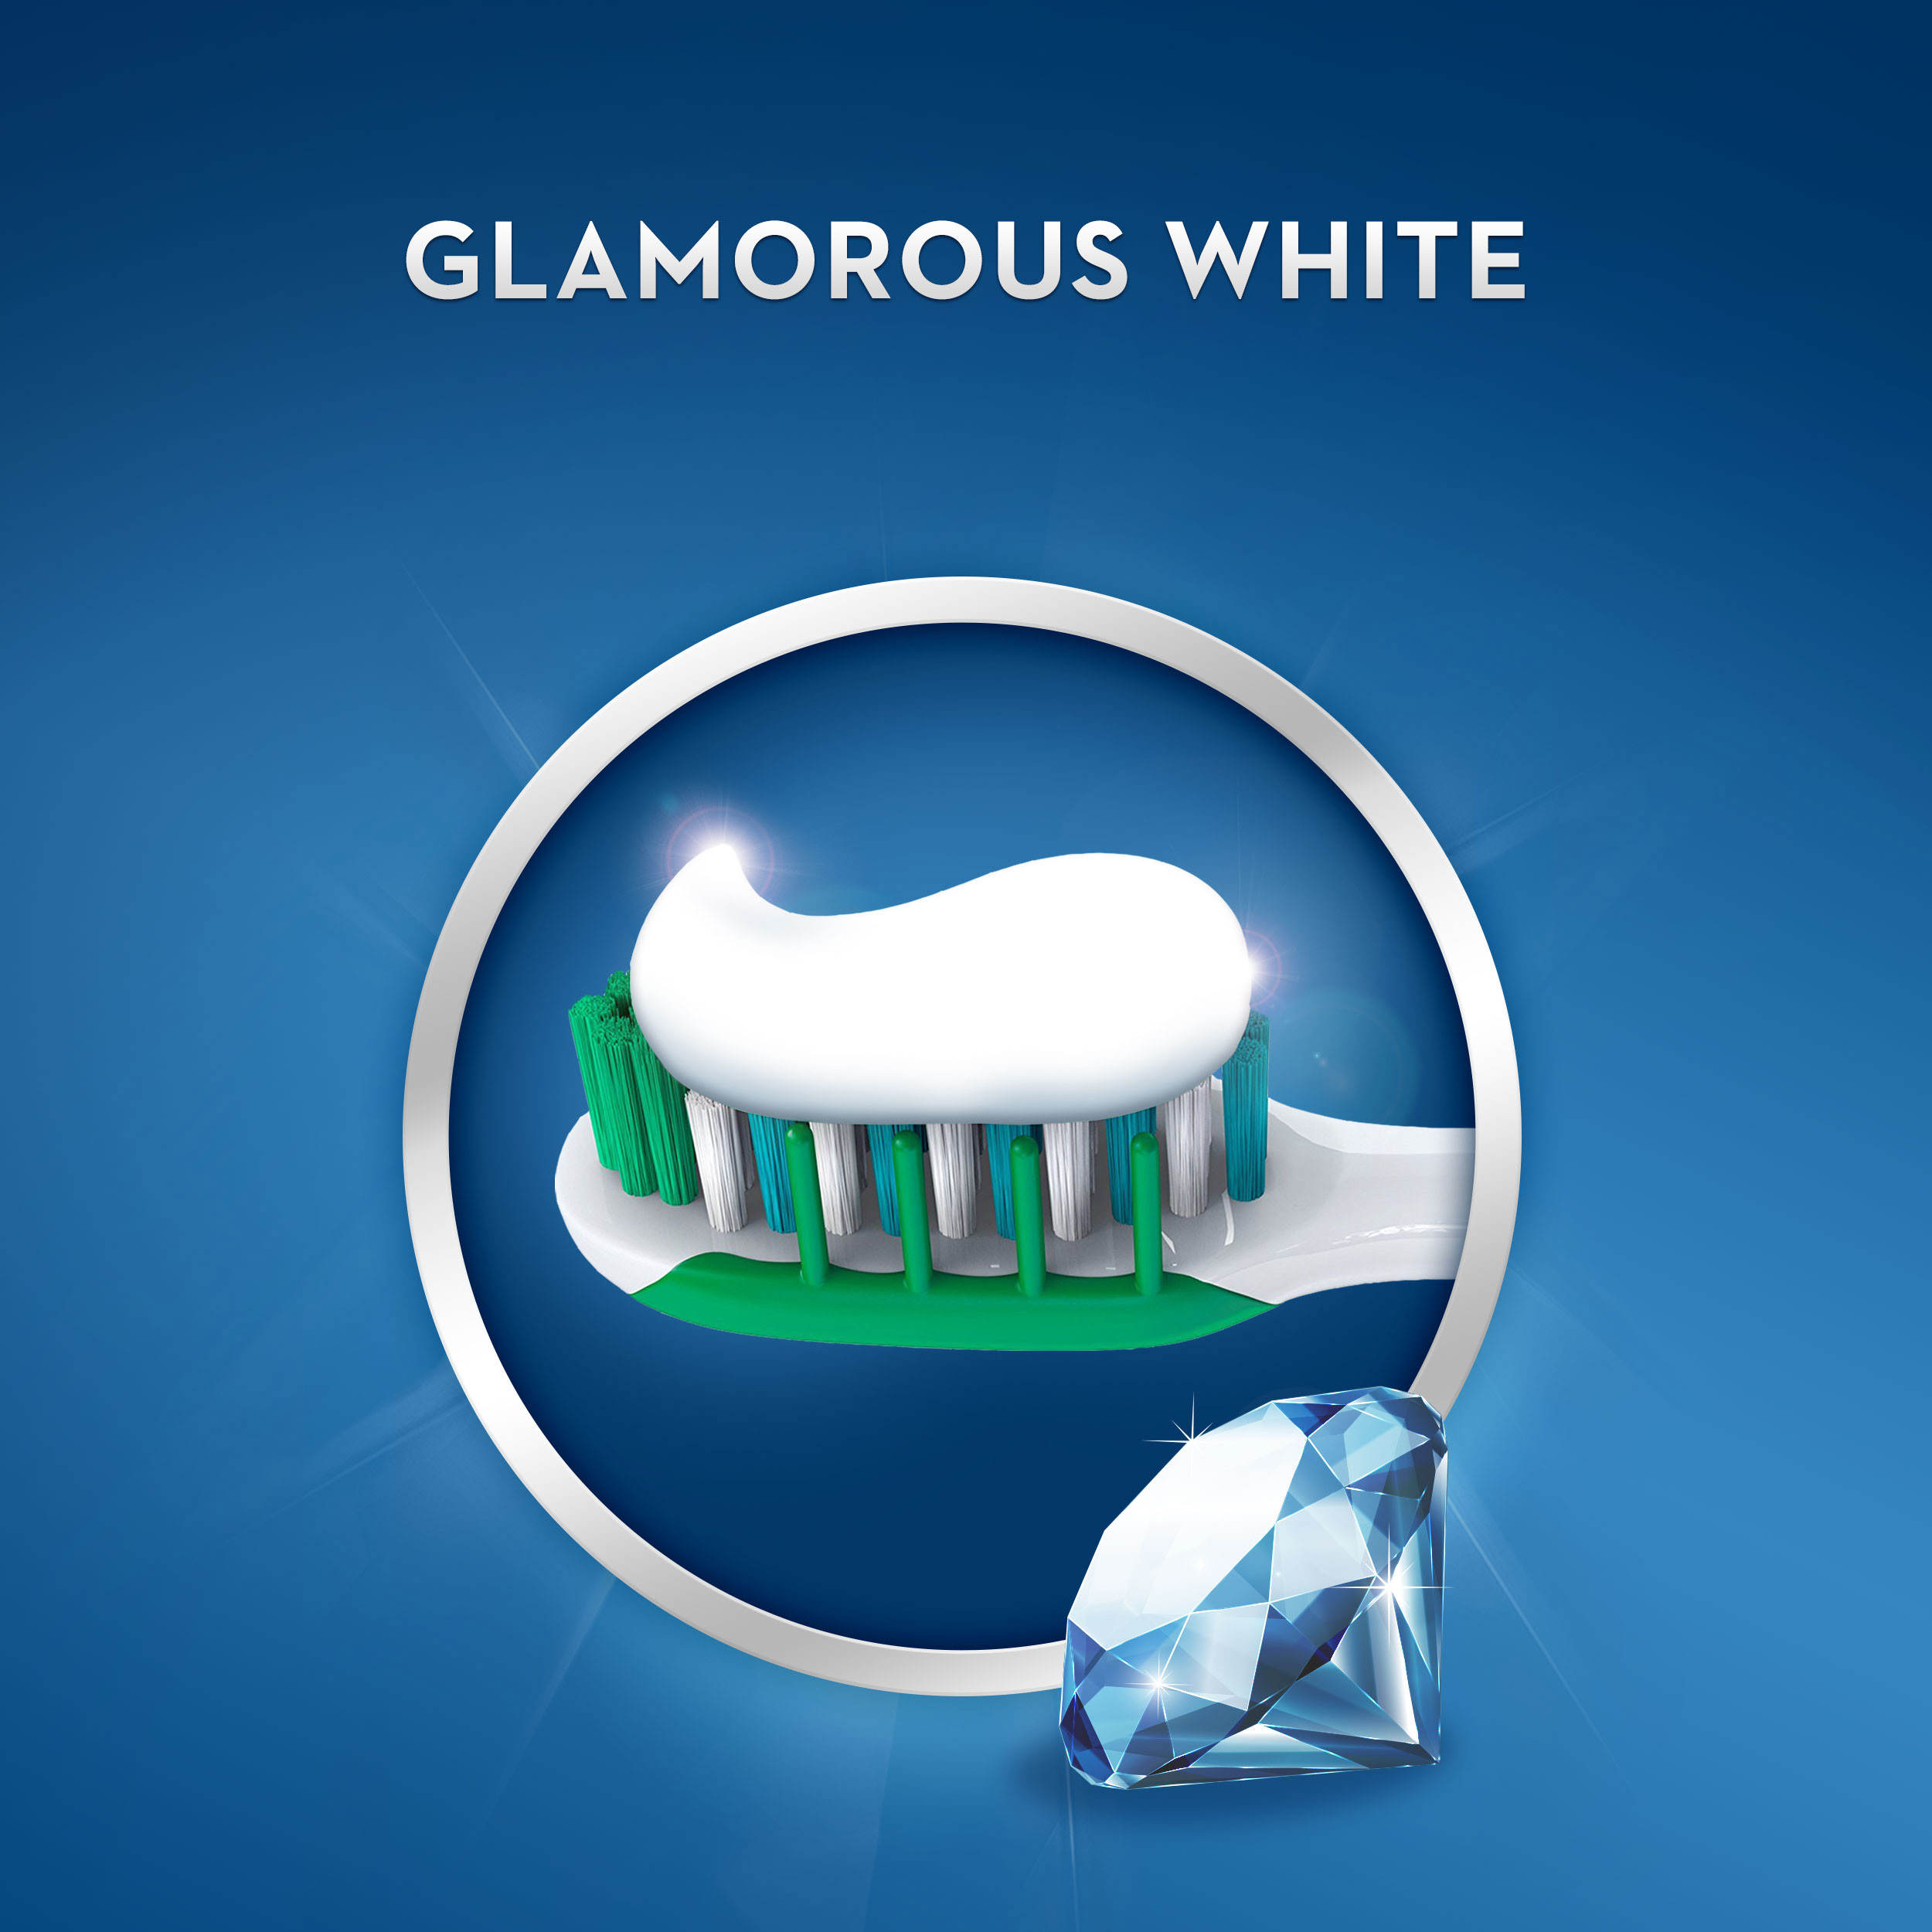 Crest 3D White, Whitening Toothpaste Glamorous White, 4.1 oz - image 4 of 5